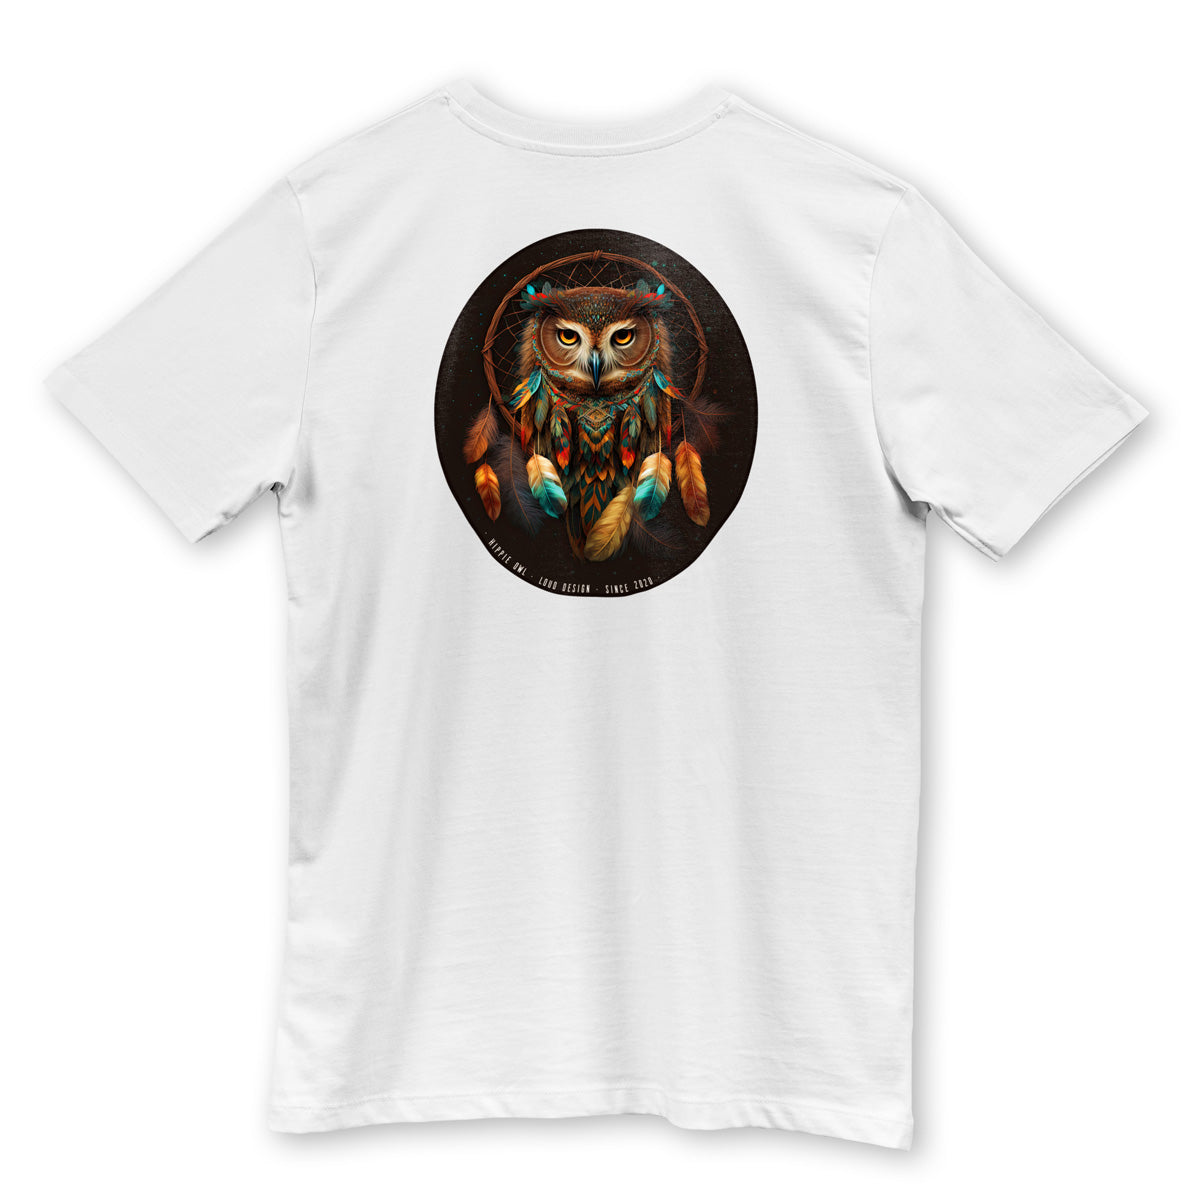 Unisex T-shirt "Hippie Owl"